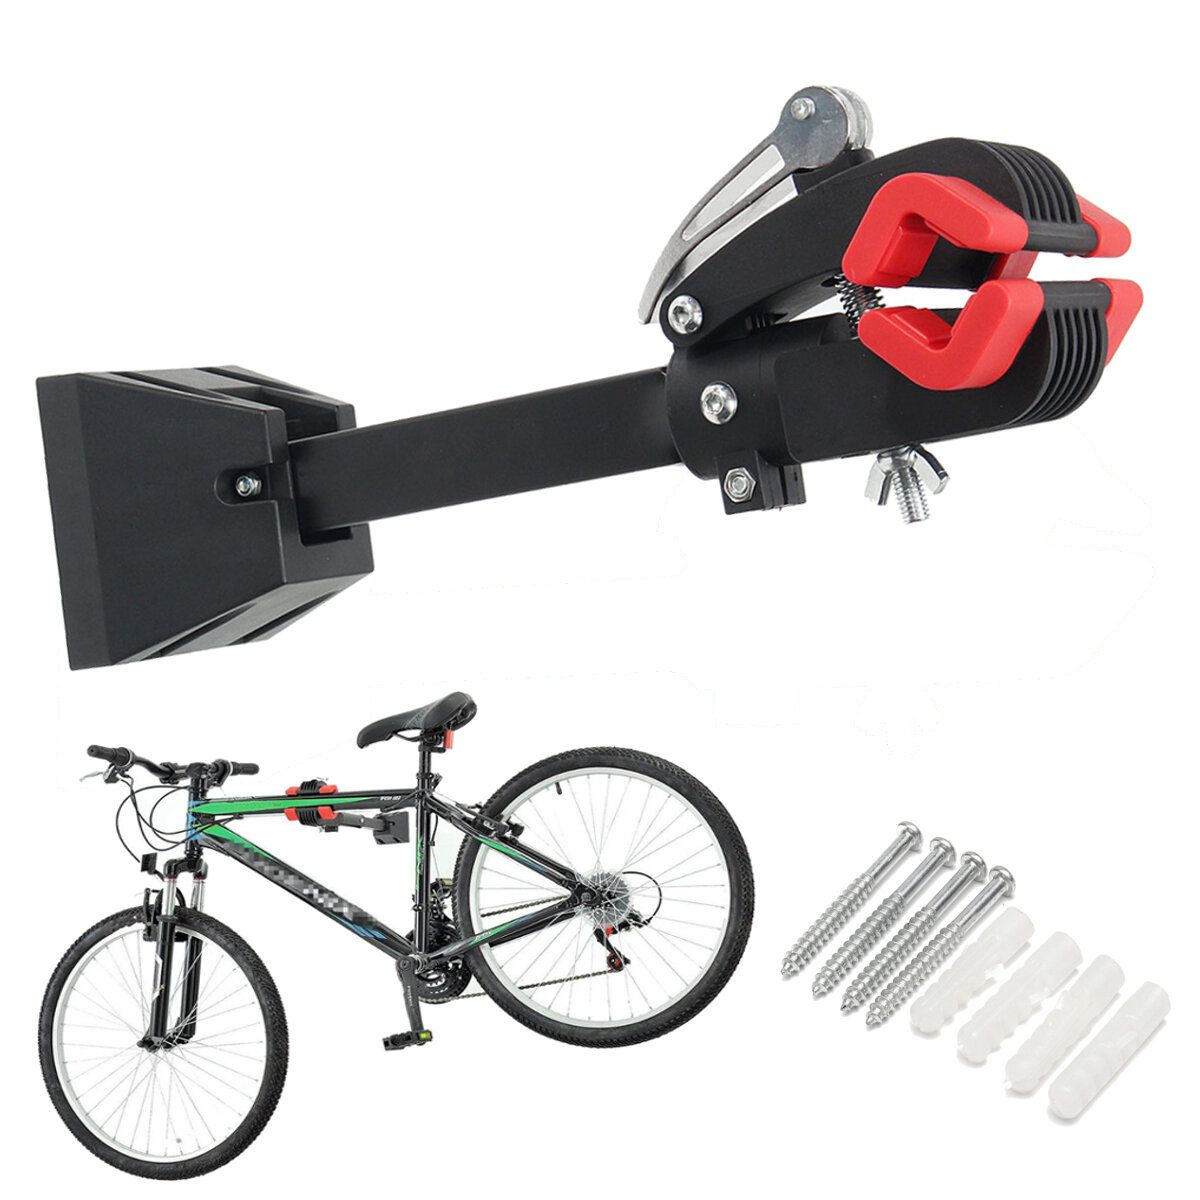 BIKIGHT Bike Wall Mount Racks Heavy Duty Bicycle Parking Racks Hanger Stands Bike Storage Repair Accessories COD